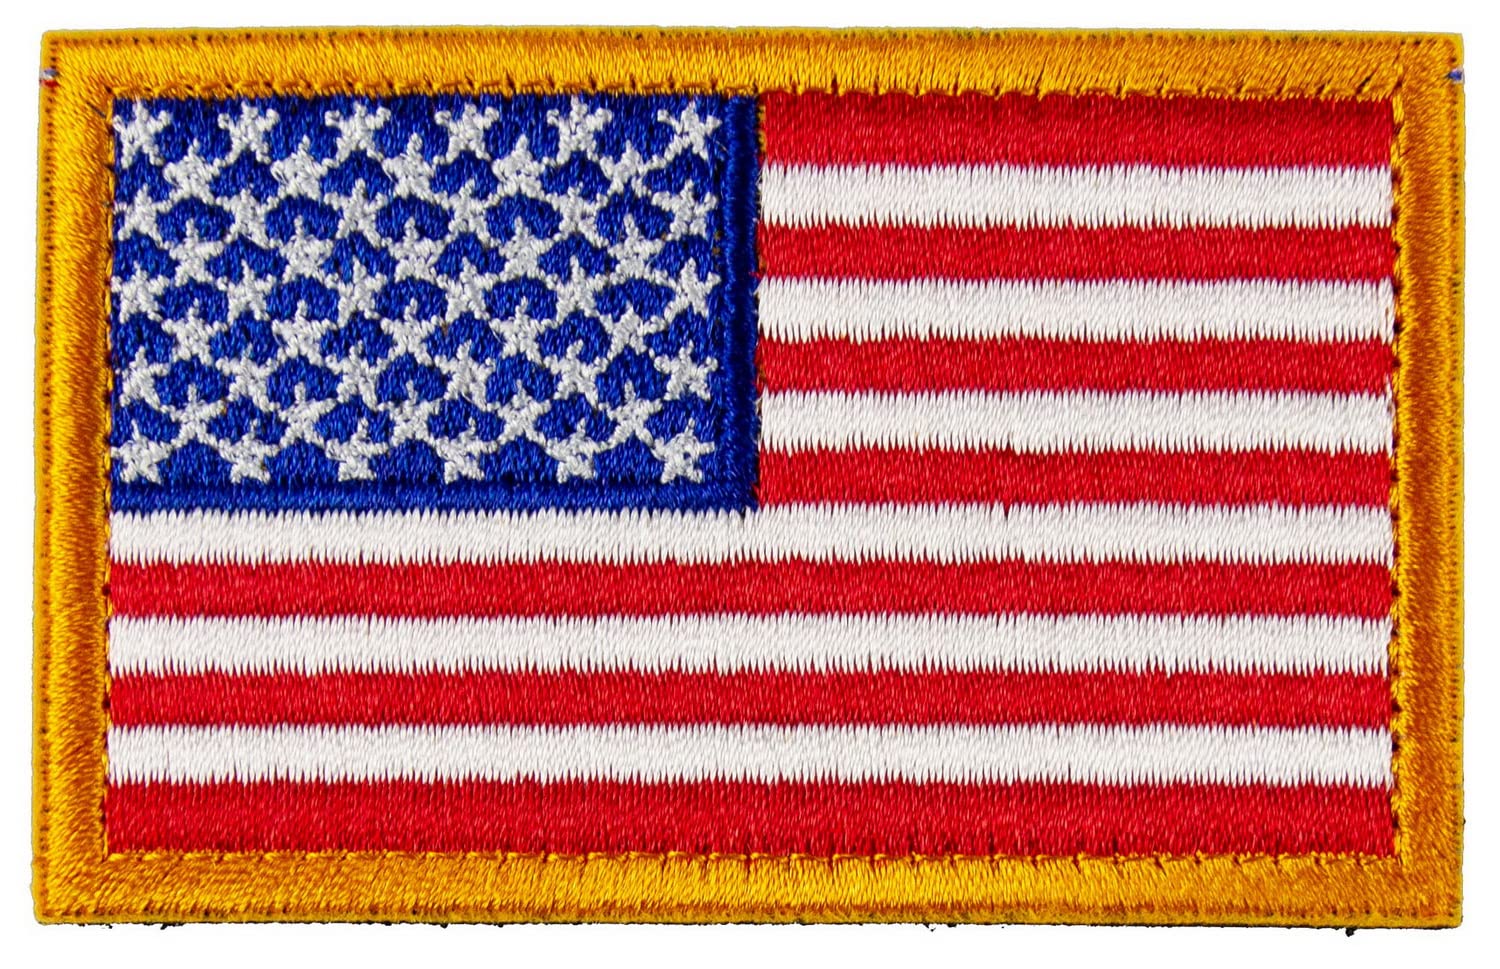 STANDARD USA FLAG PATCH WITH GOLD BORDER 2x 3 1/2 - Arizona Biker  Leathers LLC